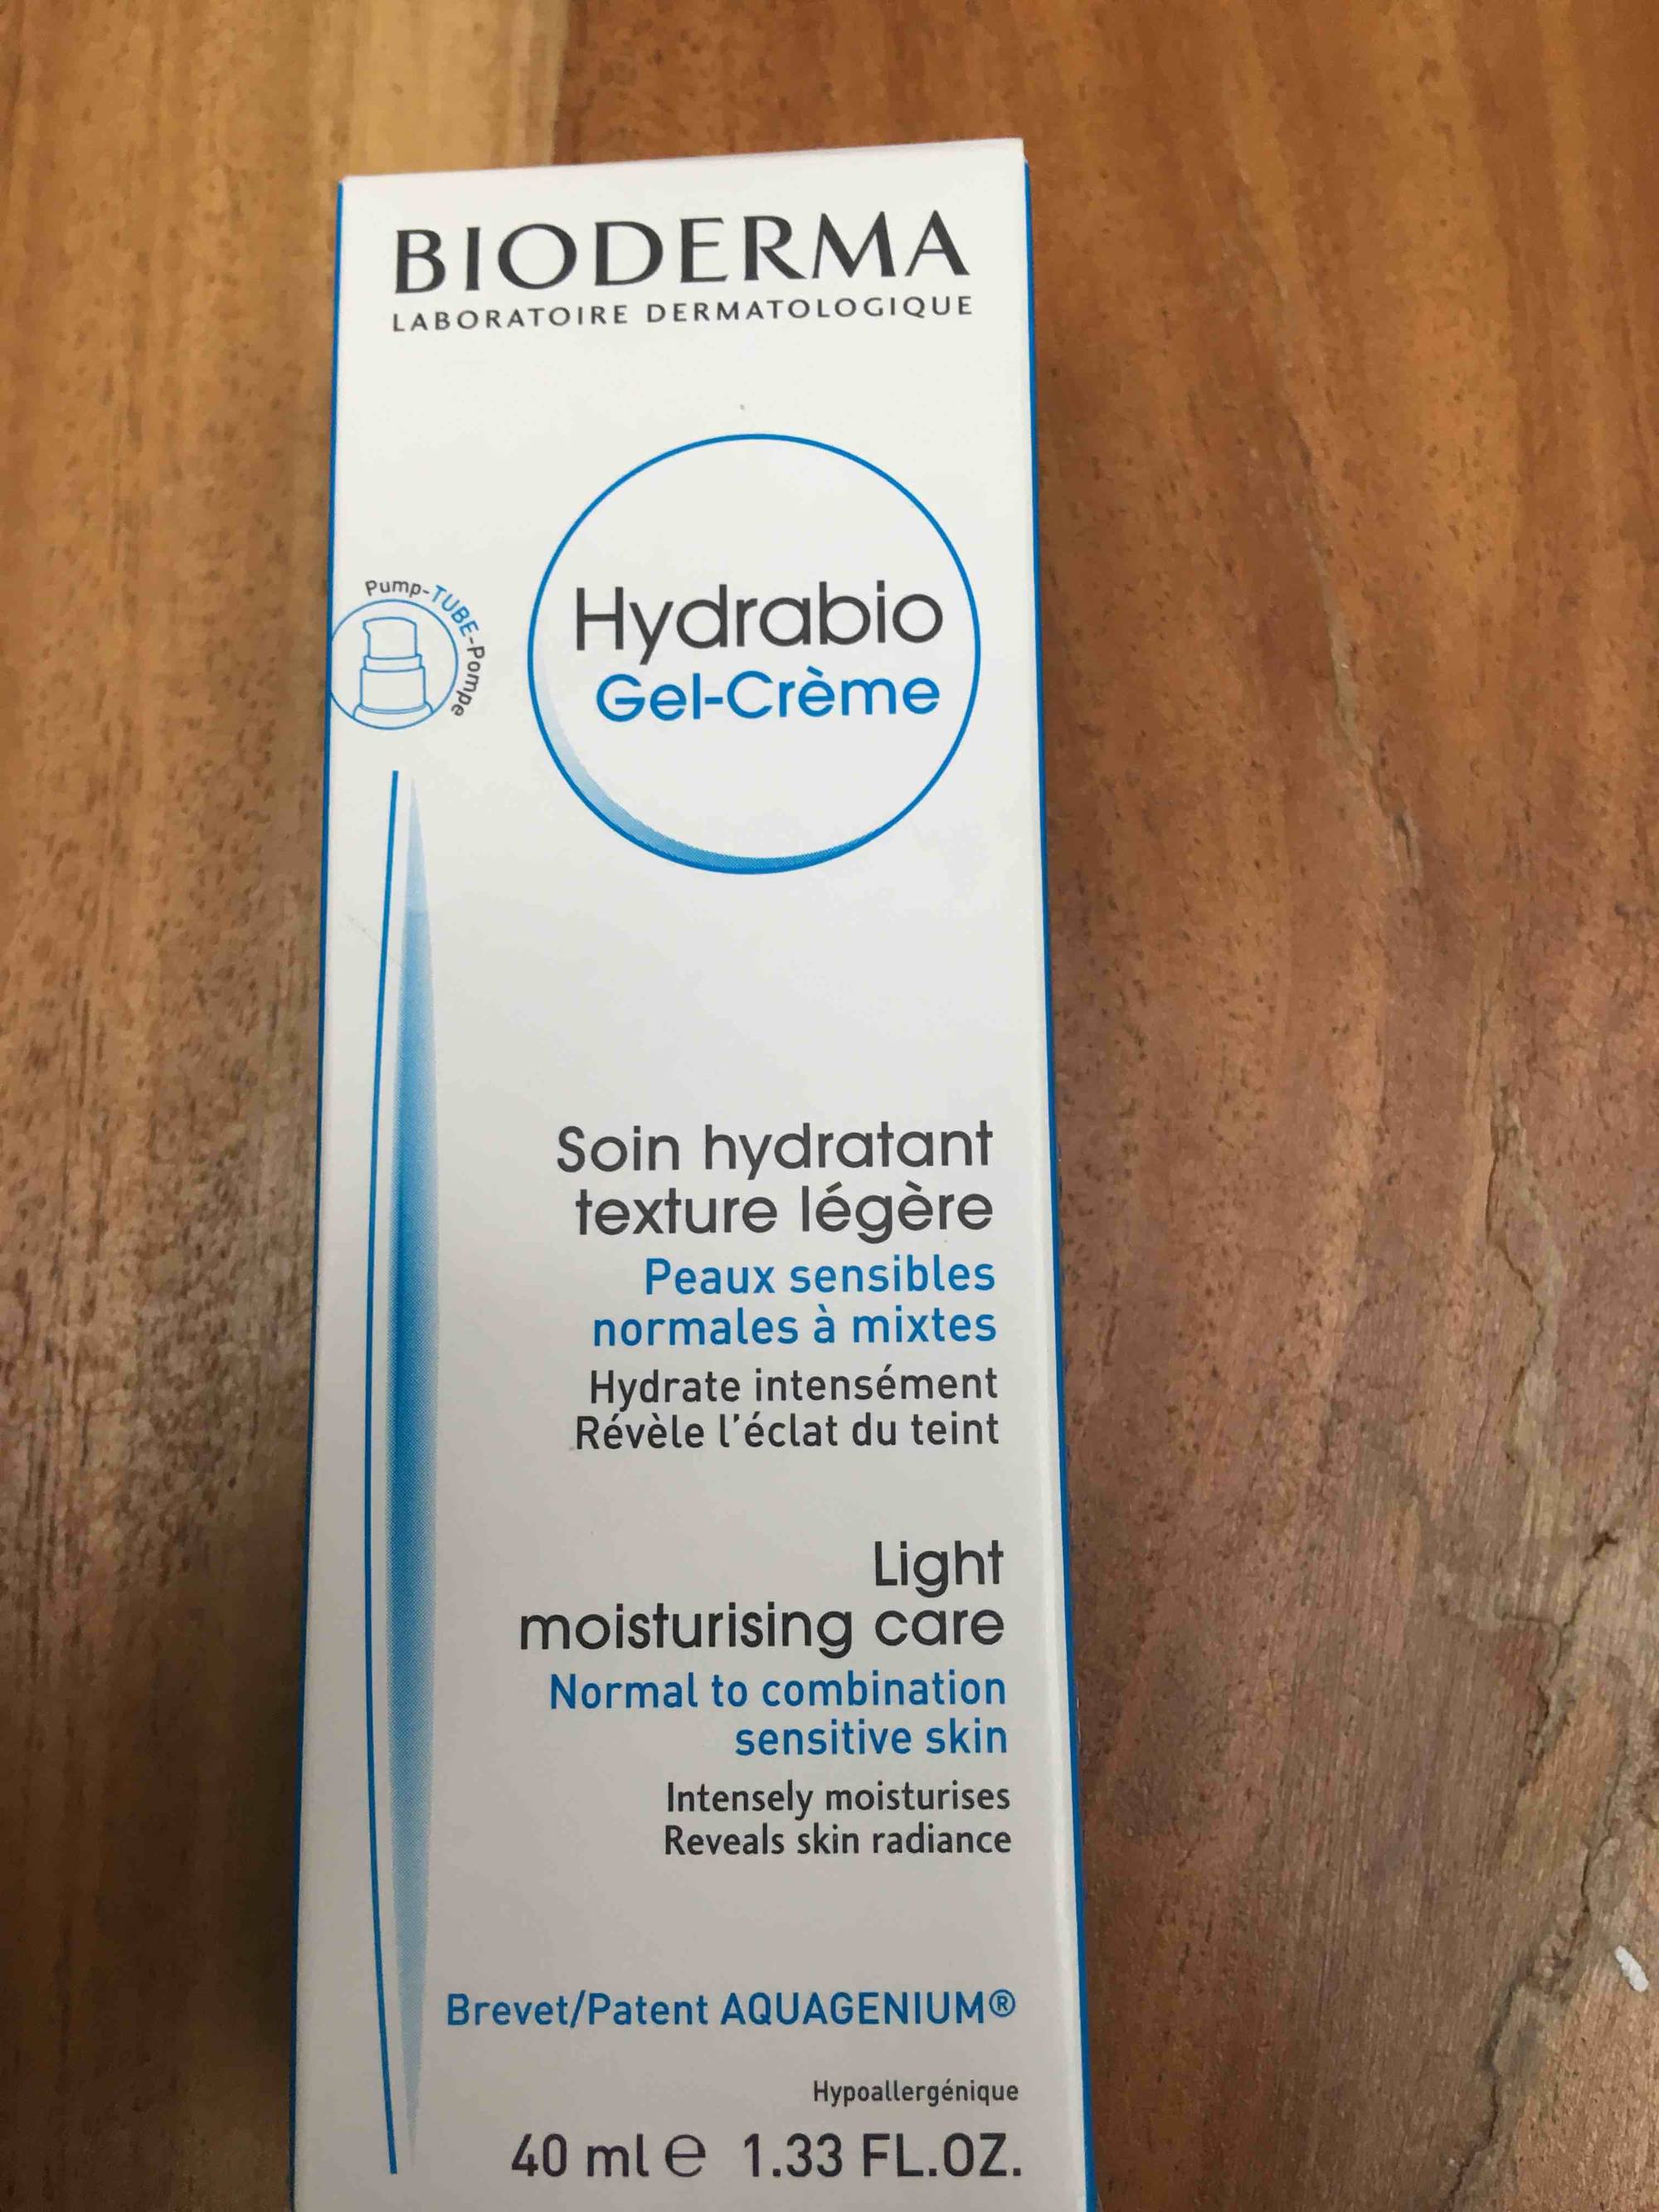 BIODERMA - Hydrabio Gel-Crème soin hydratant texture légère